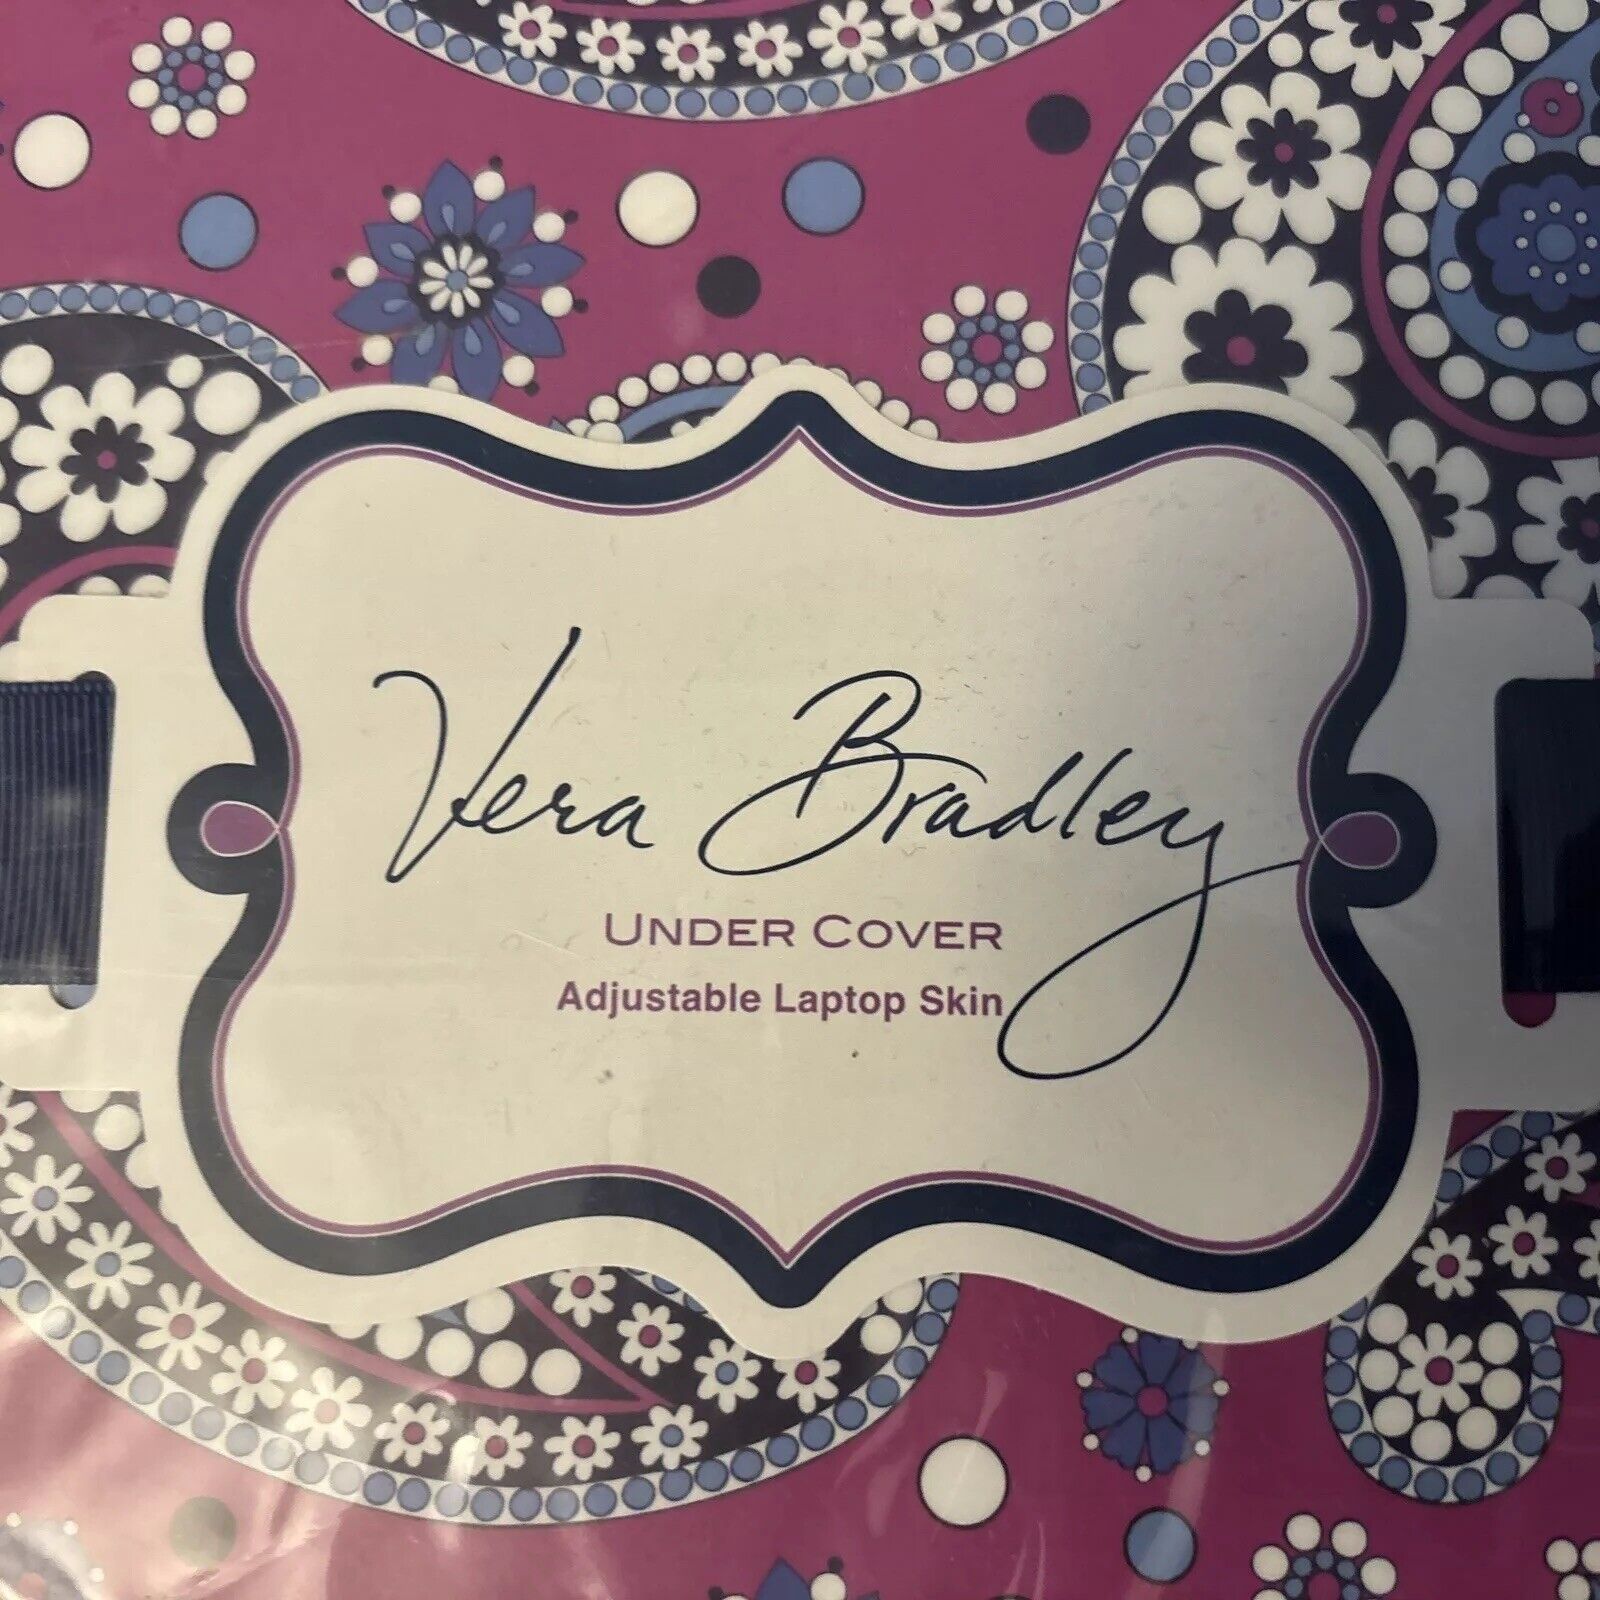 Vera Bradley Adjustable Laptop Skin in Boysenberry- New in Package